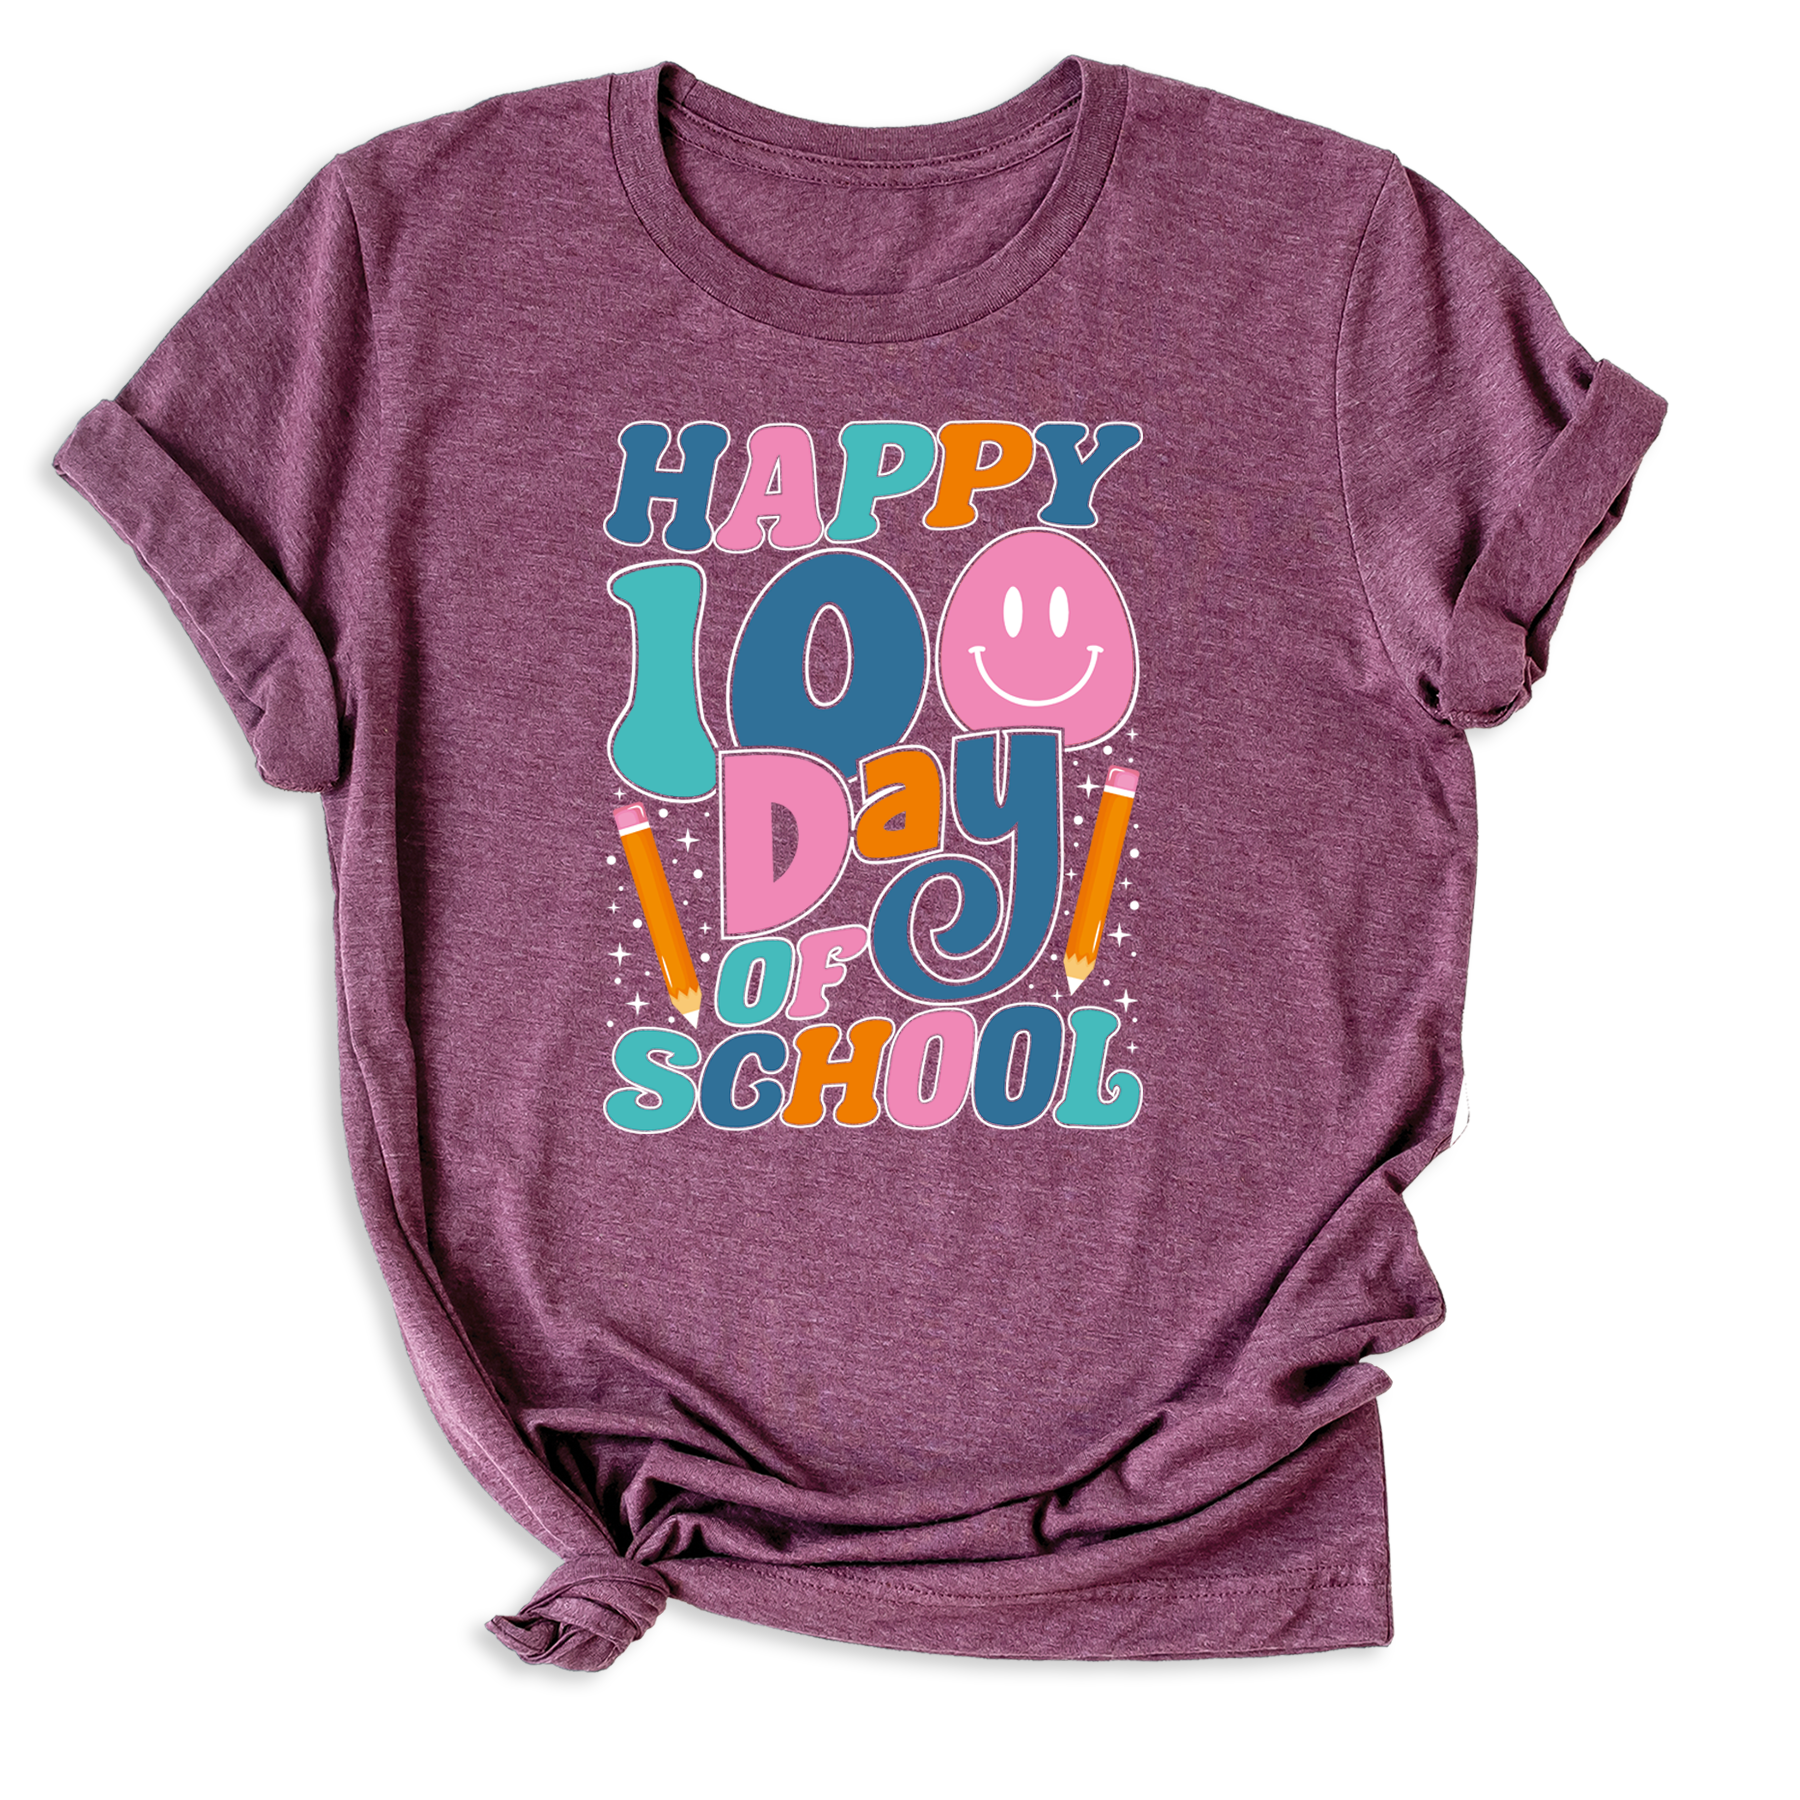 happy 100 days of school shirts